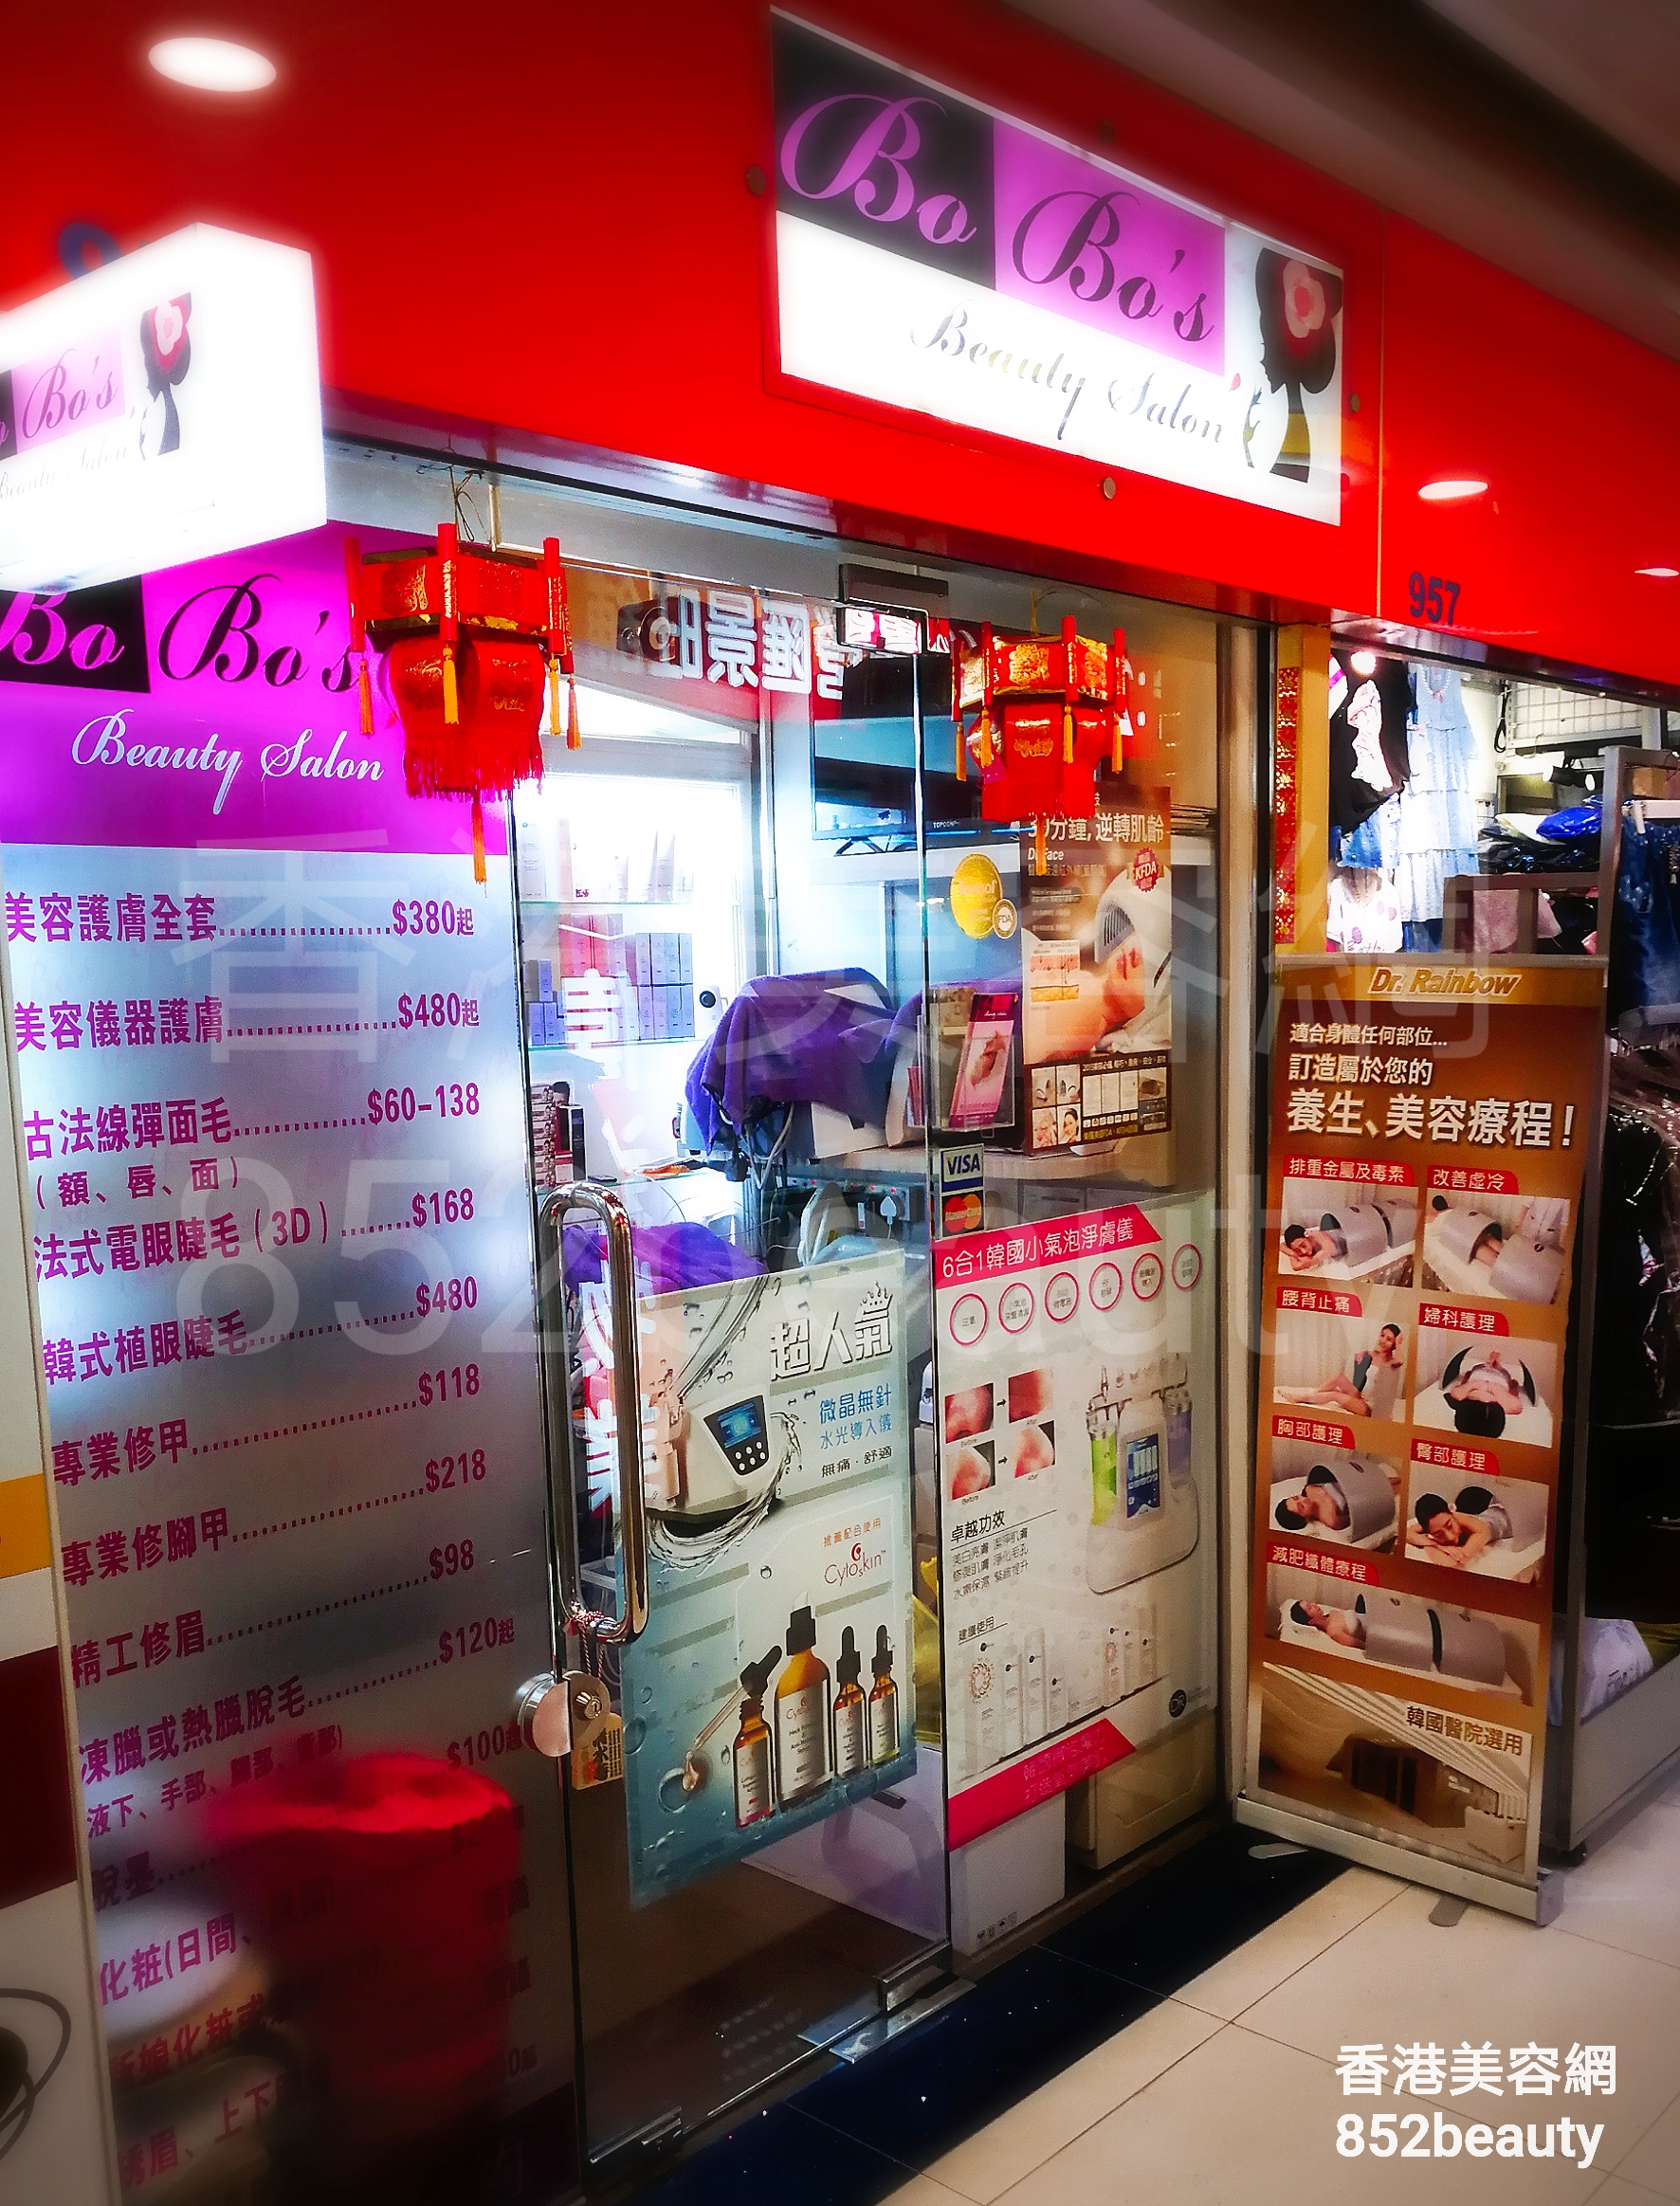 香港美容網 Hong Kong Beauty Salon 美容院 / 美容師: Bo Bo's Beauty Salon